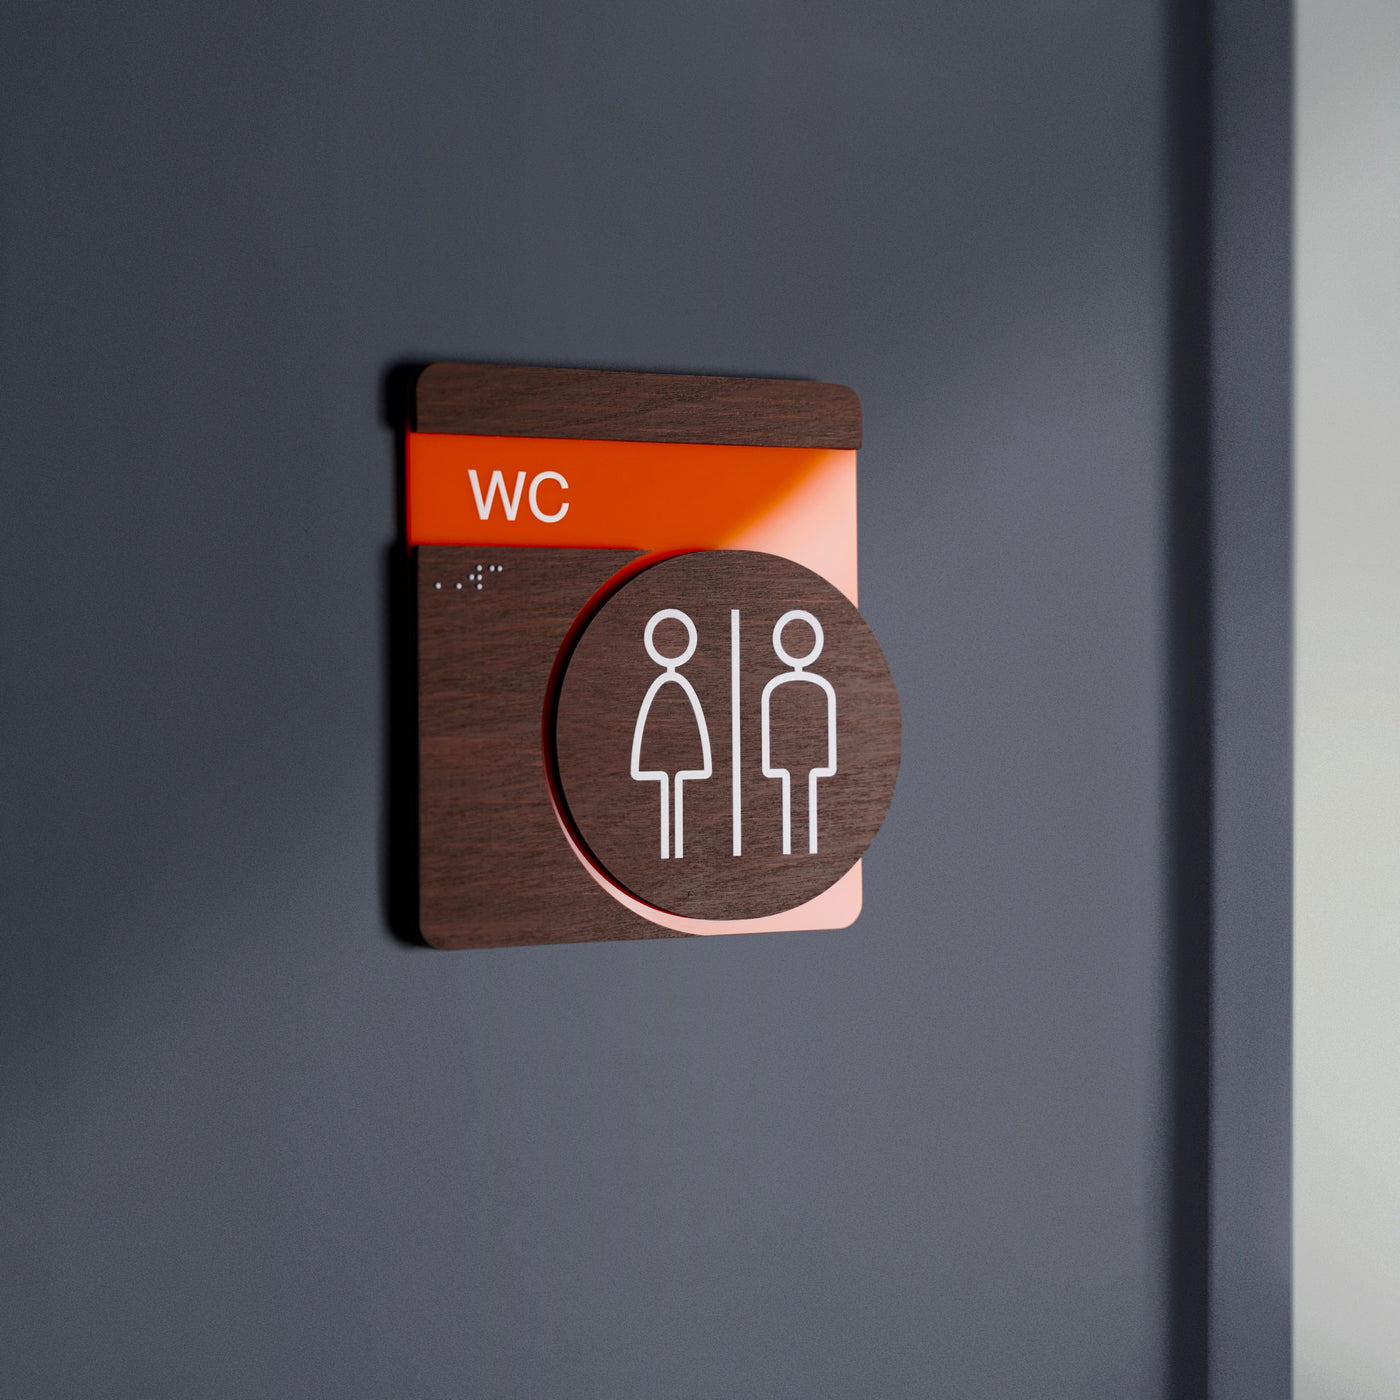 Bathroom Signs - Men's Restroom Sign: "Genova" Design